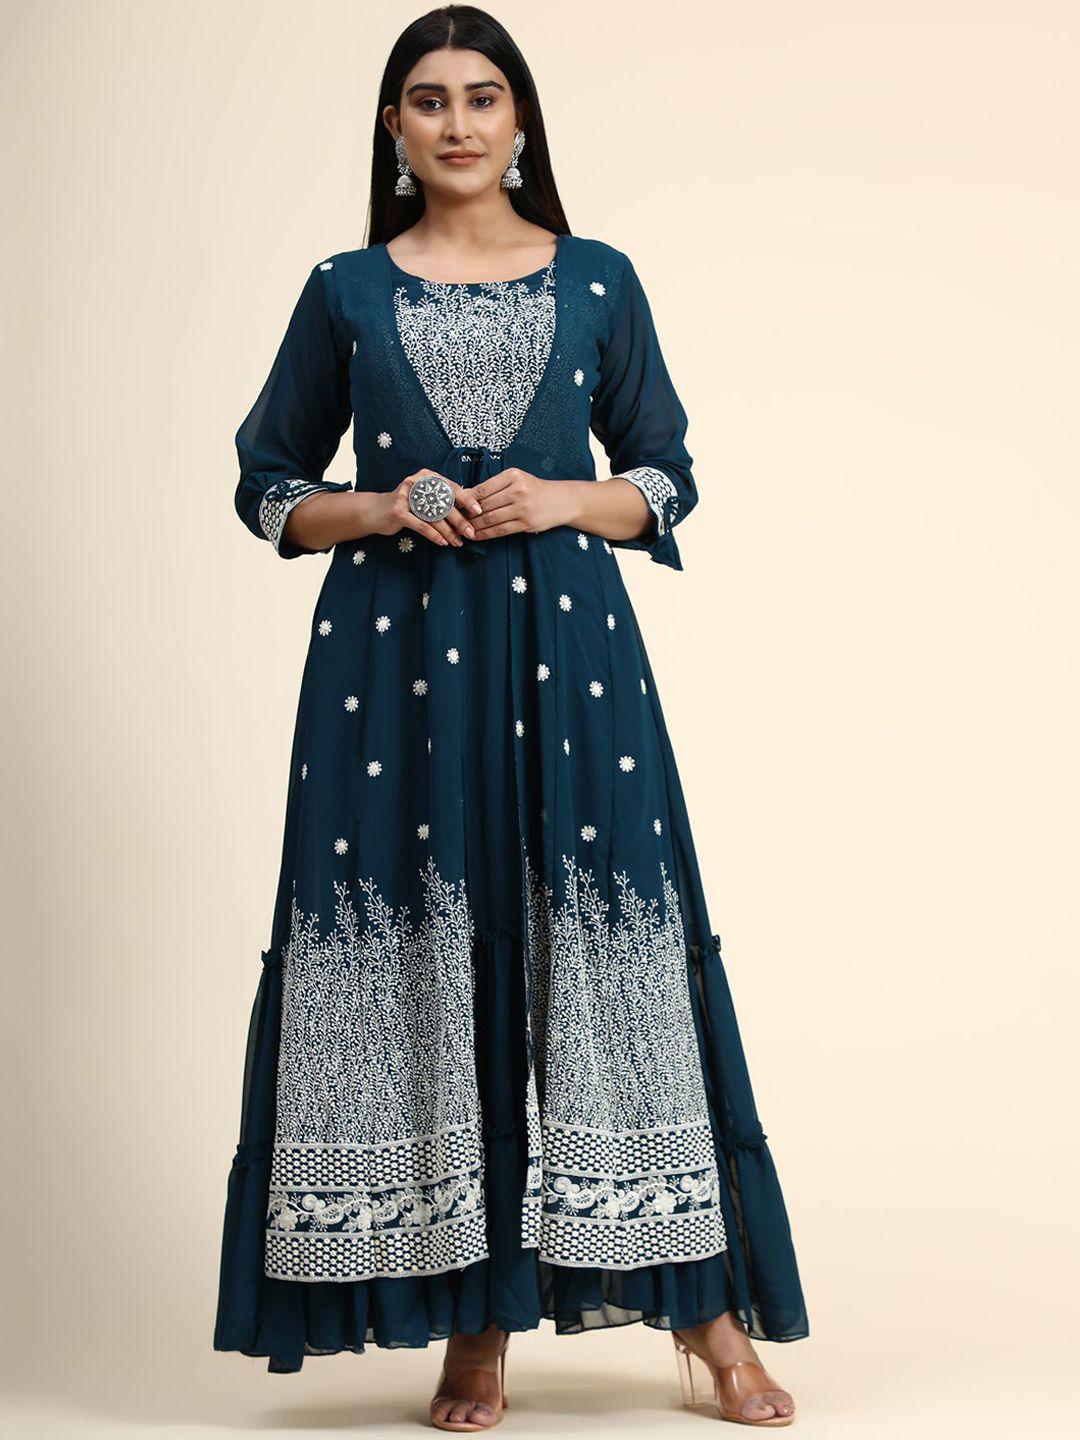 kalini women teal blue embellished layered ethnic dress